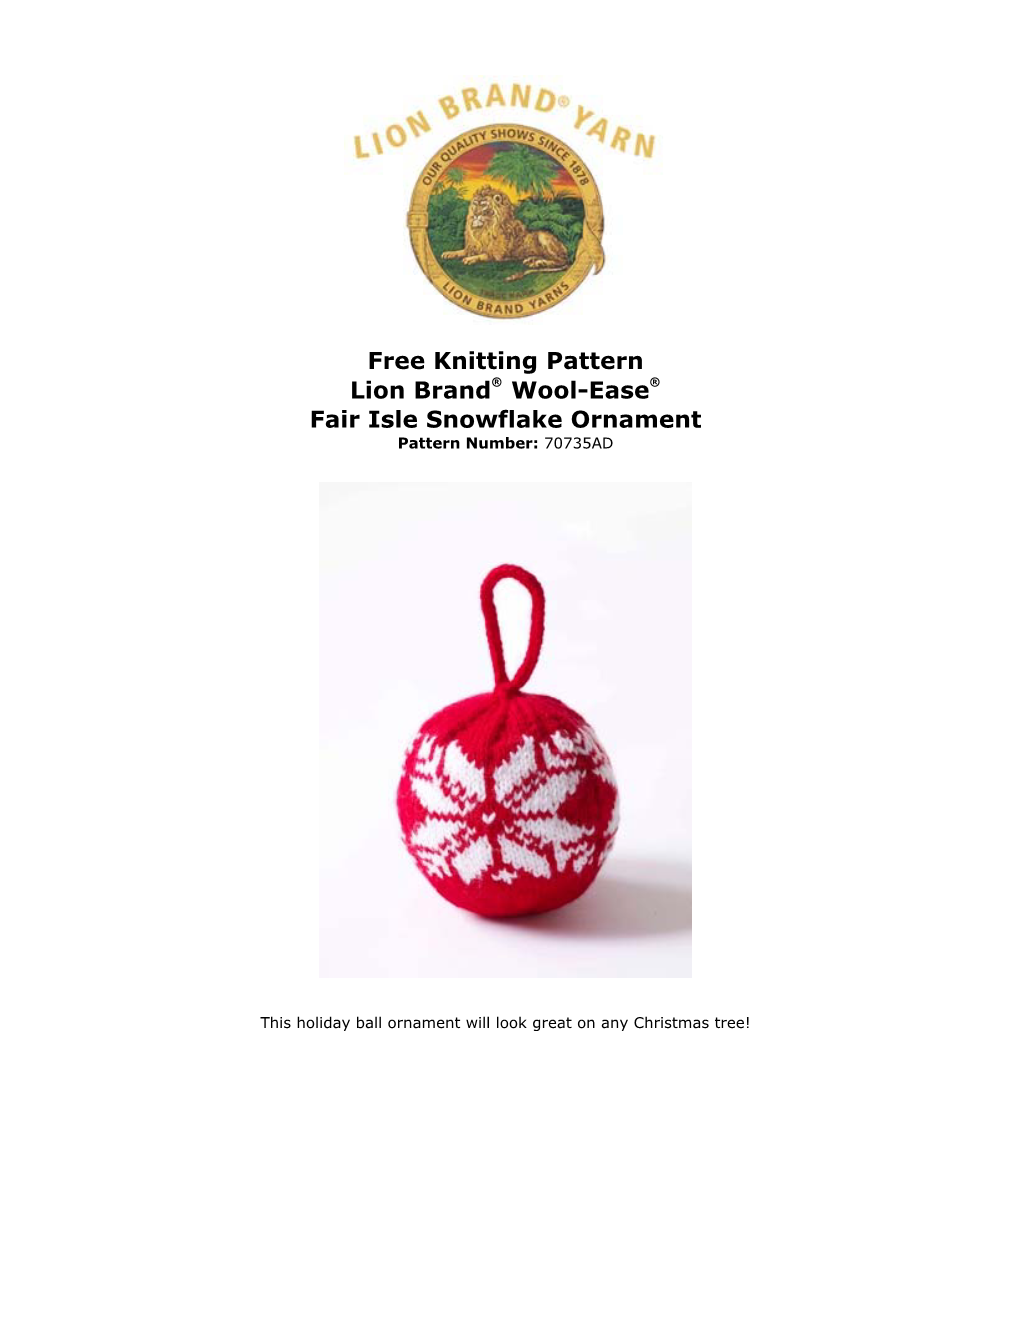 Free Knitting Pattern: Wool-Ease® Fair Isle Snowflake Ornament